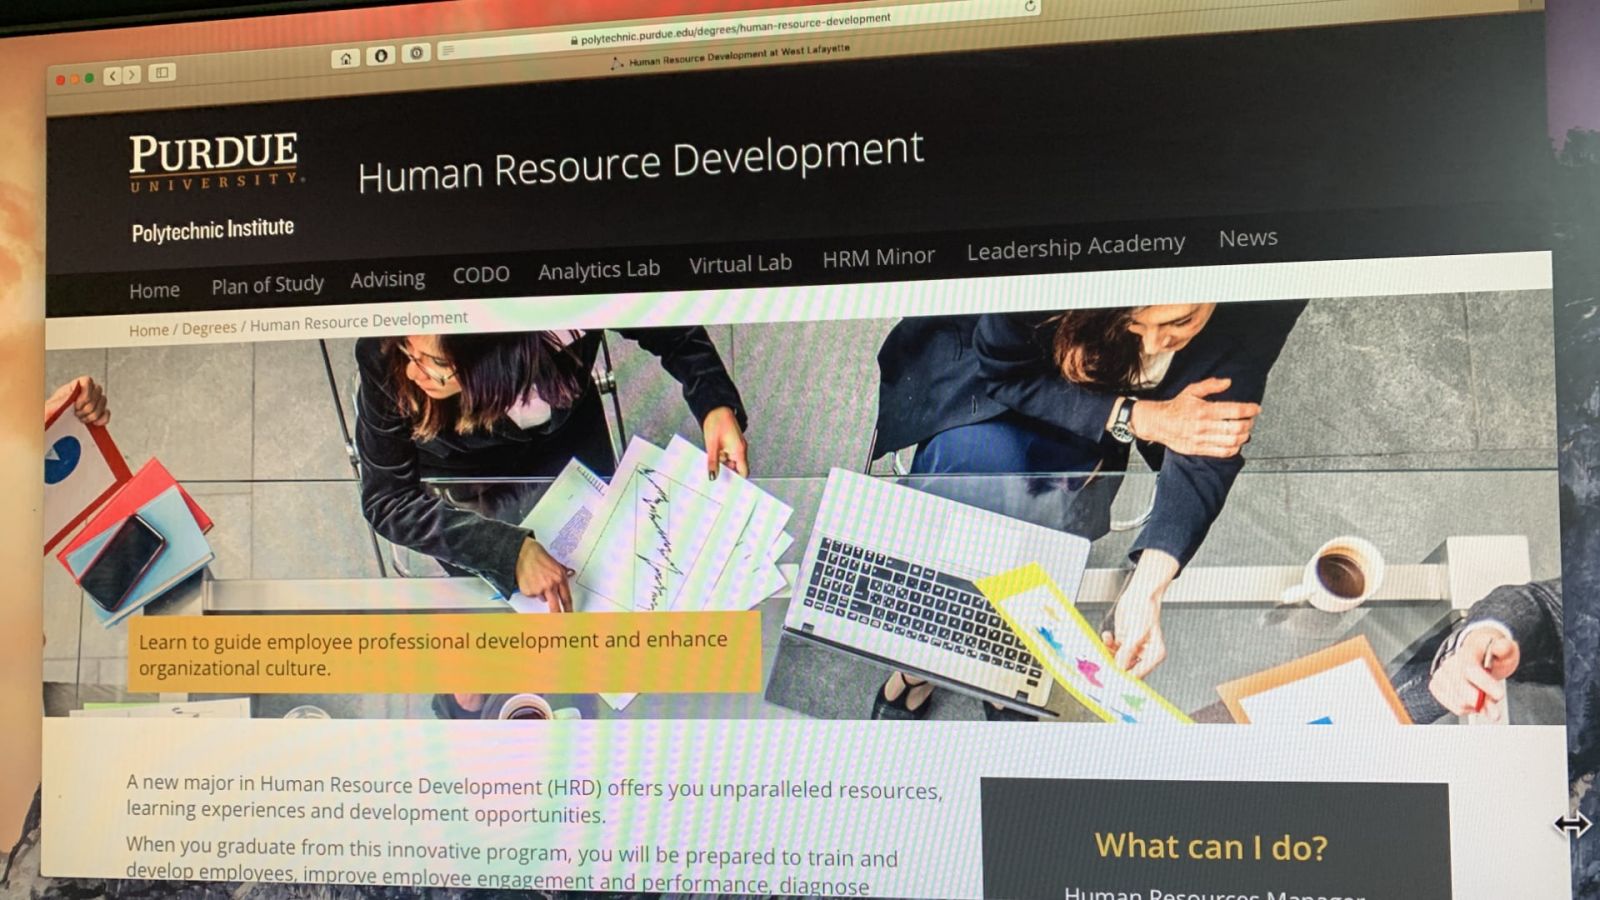 Human Resource Development major